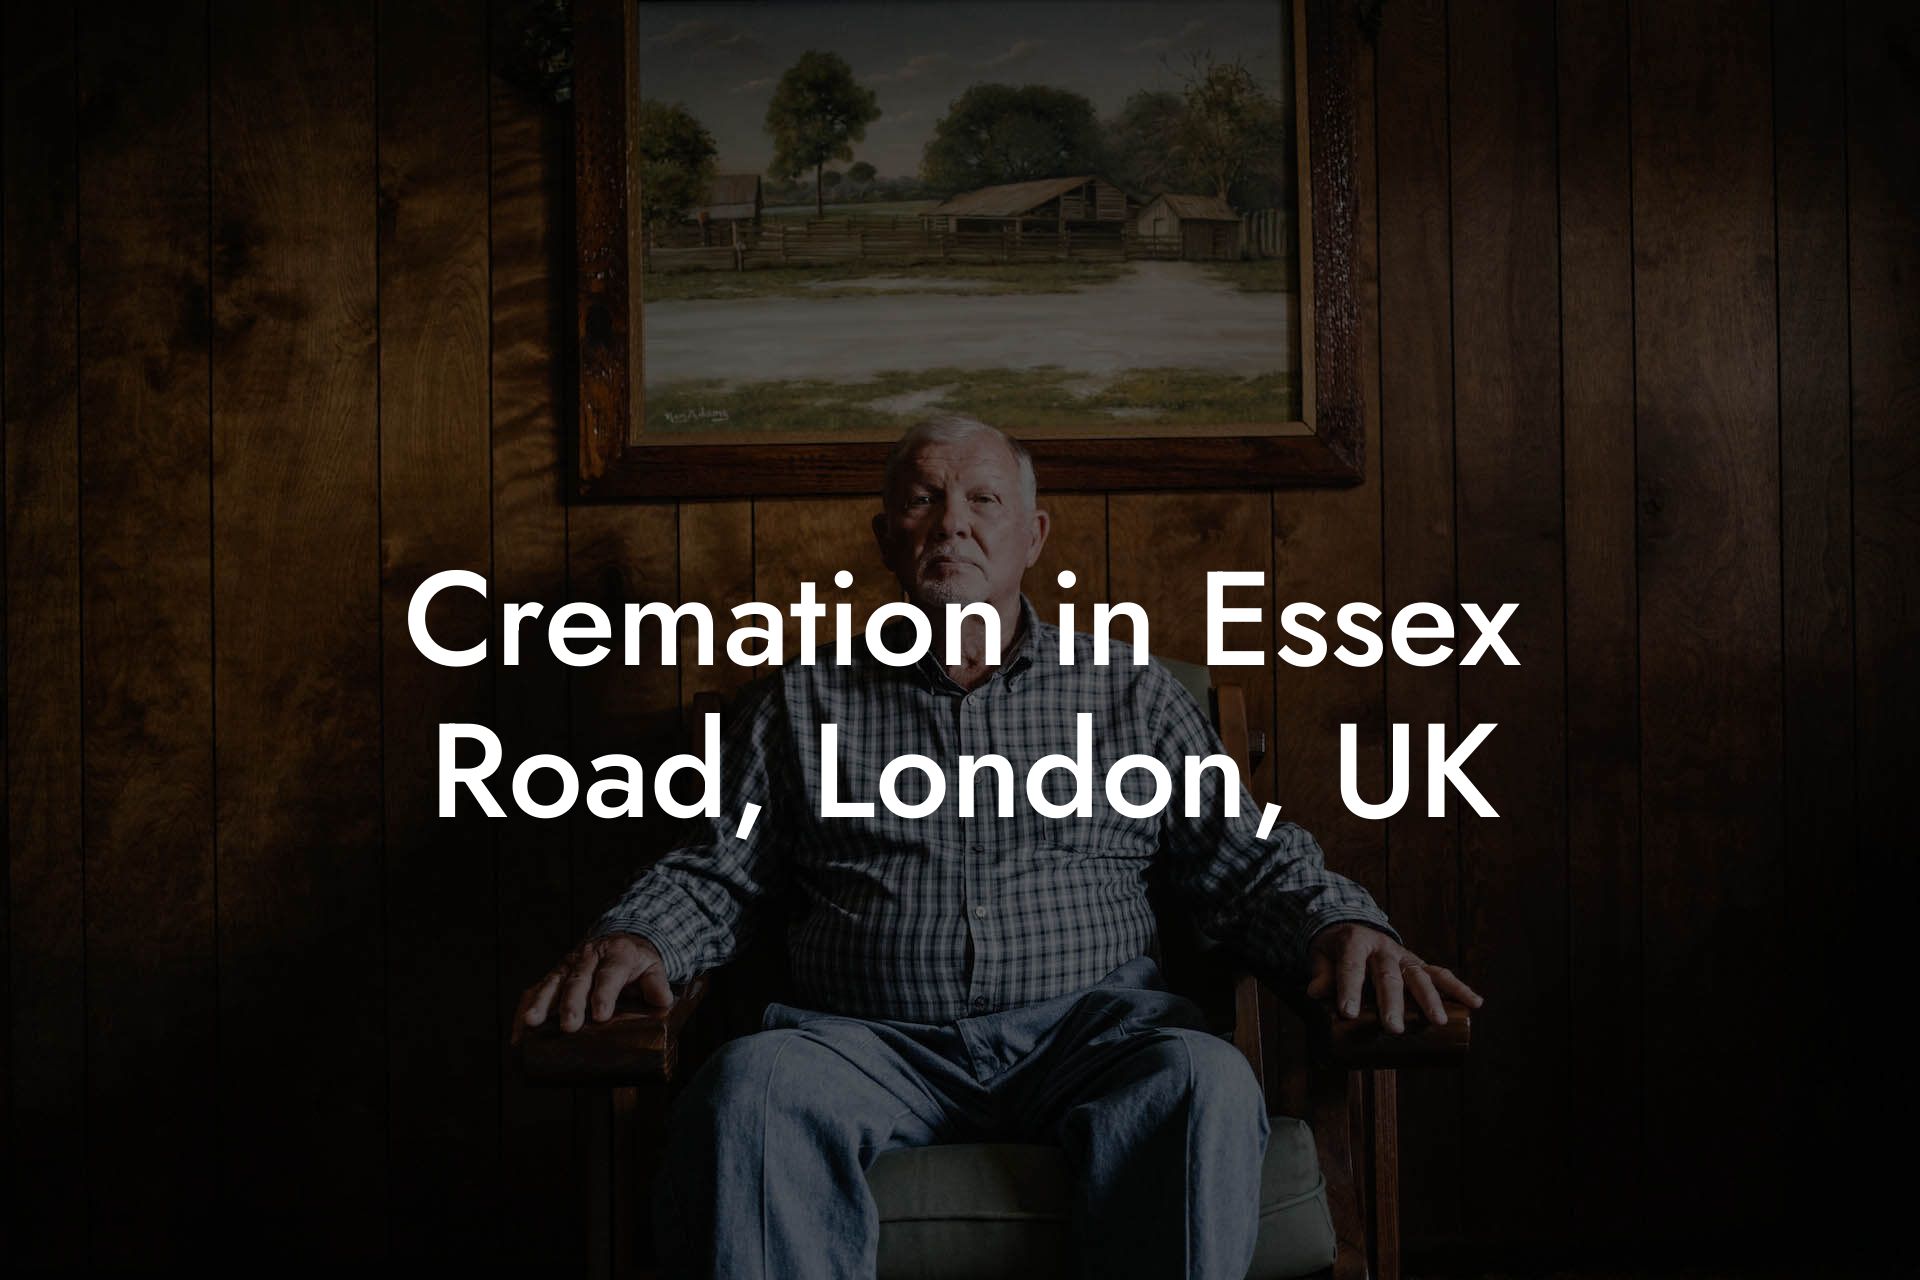 Cremation in Essex Road, London, UK